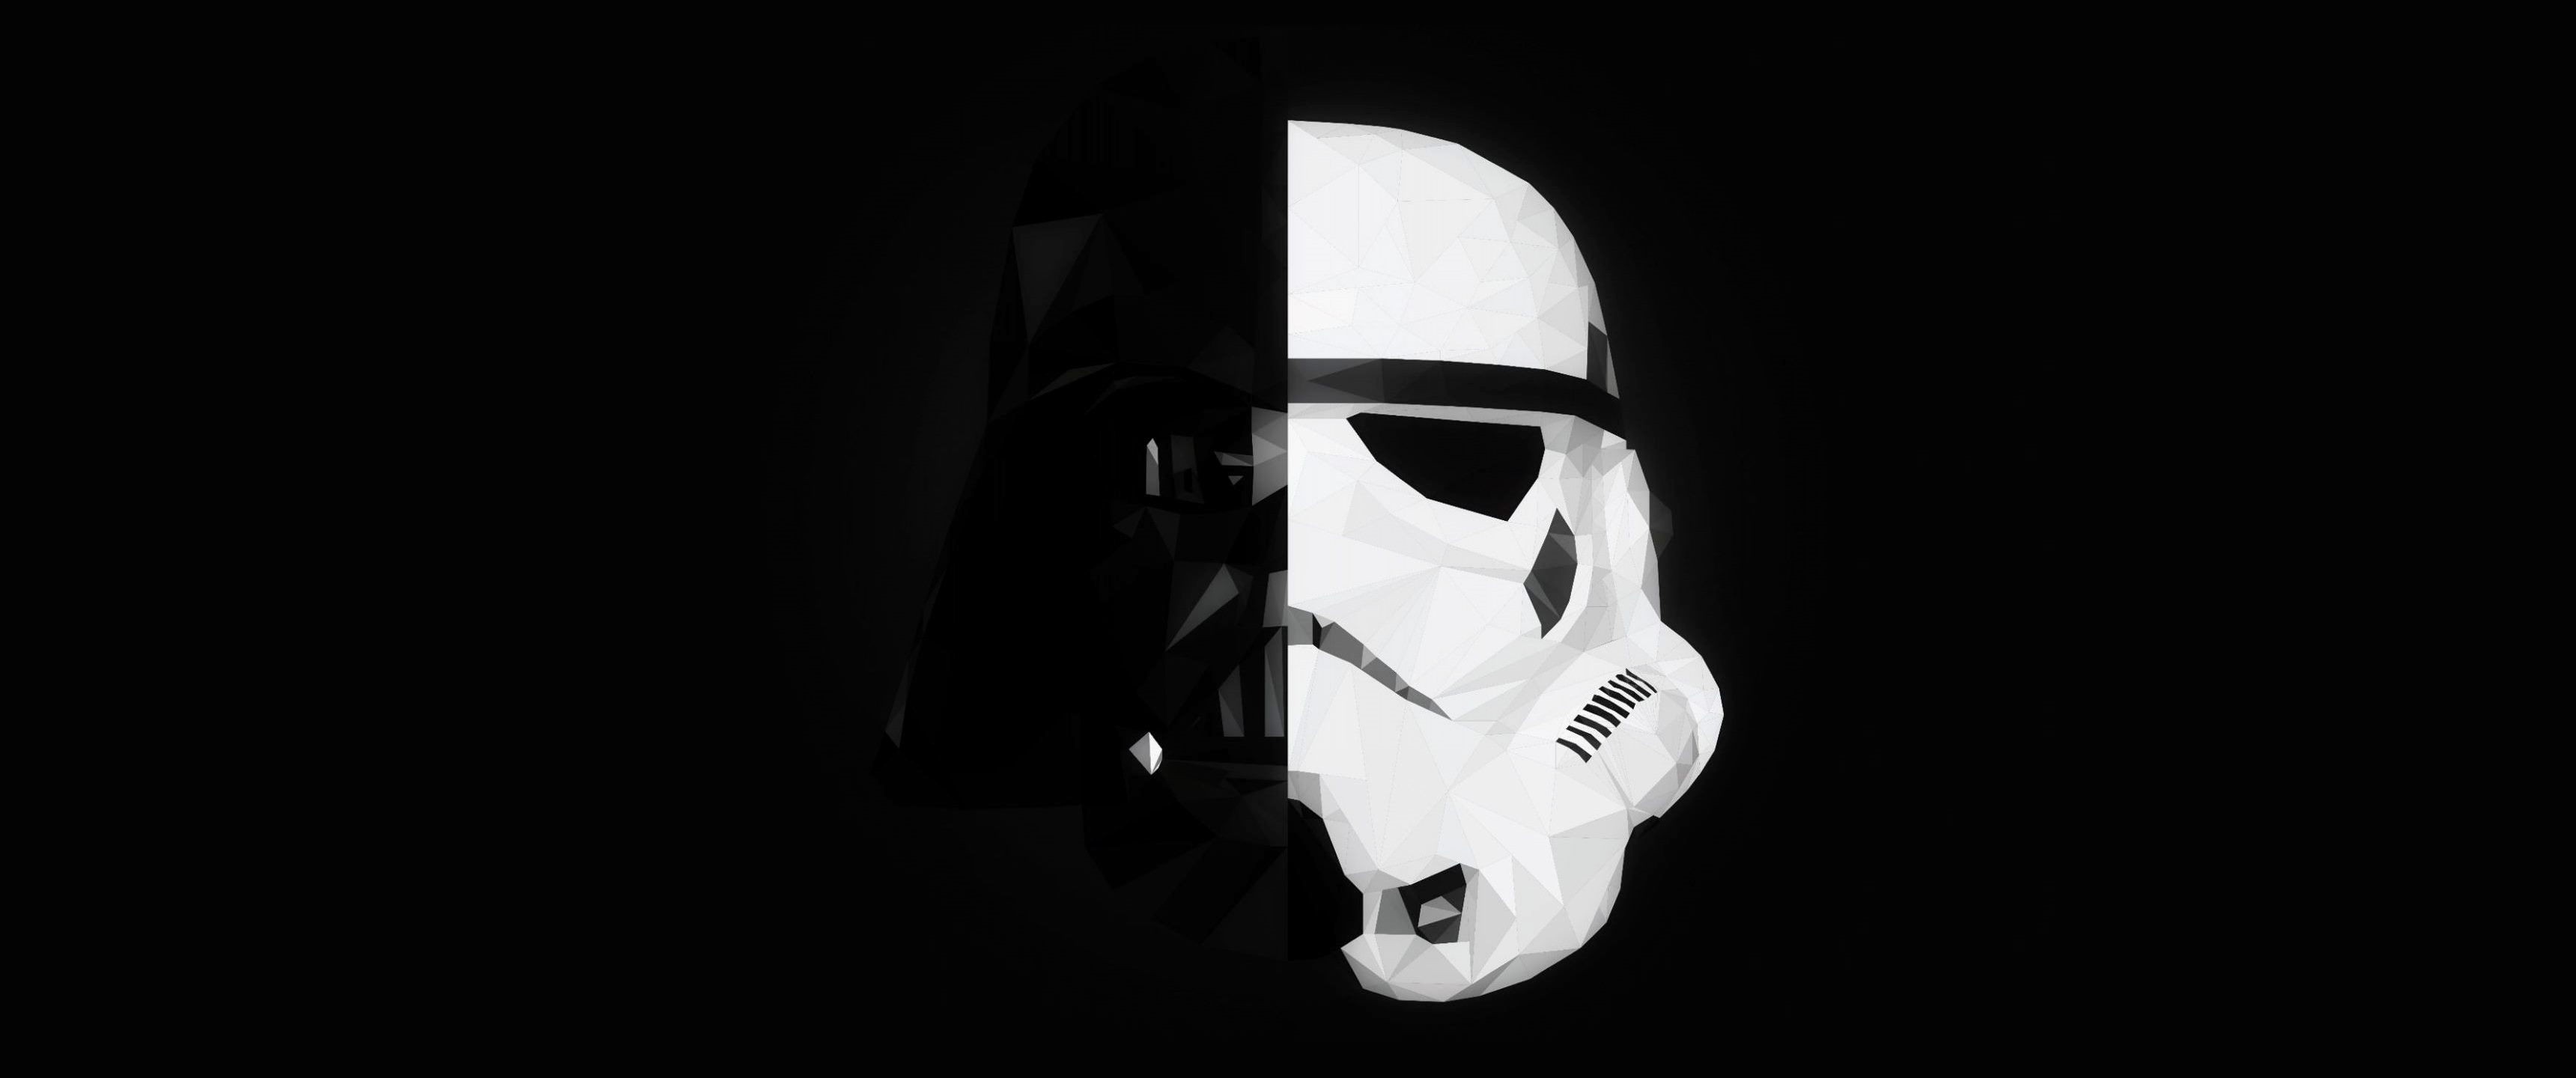 General 3440x1440 Star Wars stormtrooper Darth Vader mask splitting minimalism Imperial Stormtrooper black background movie characters simple background digital art ultrawide